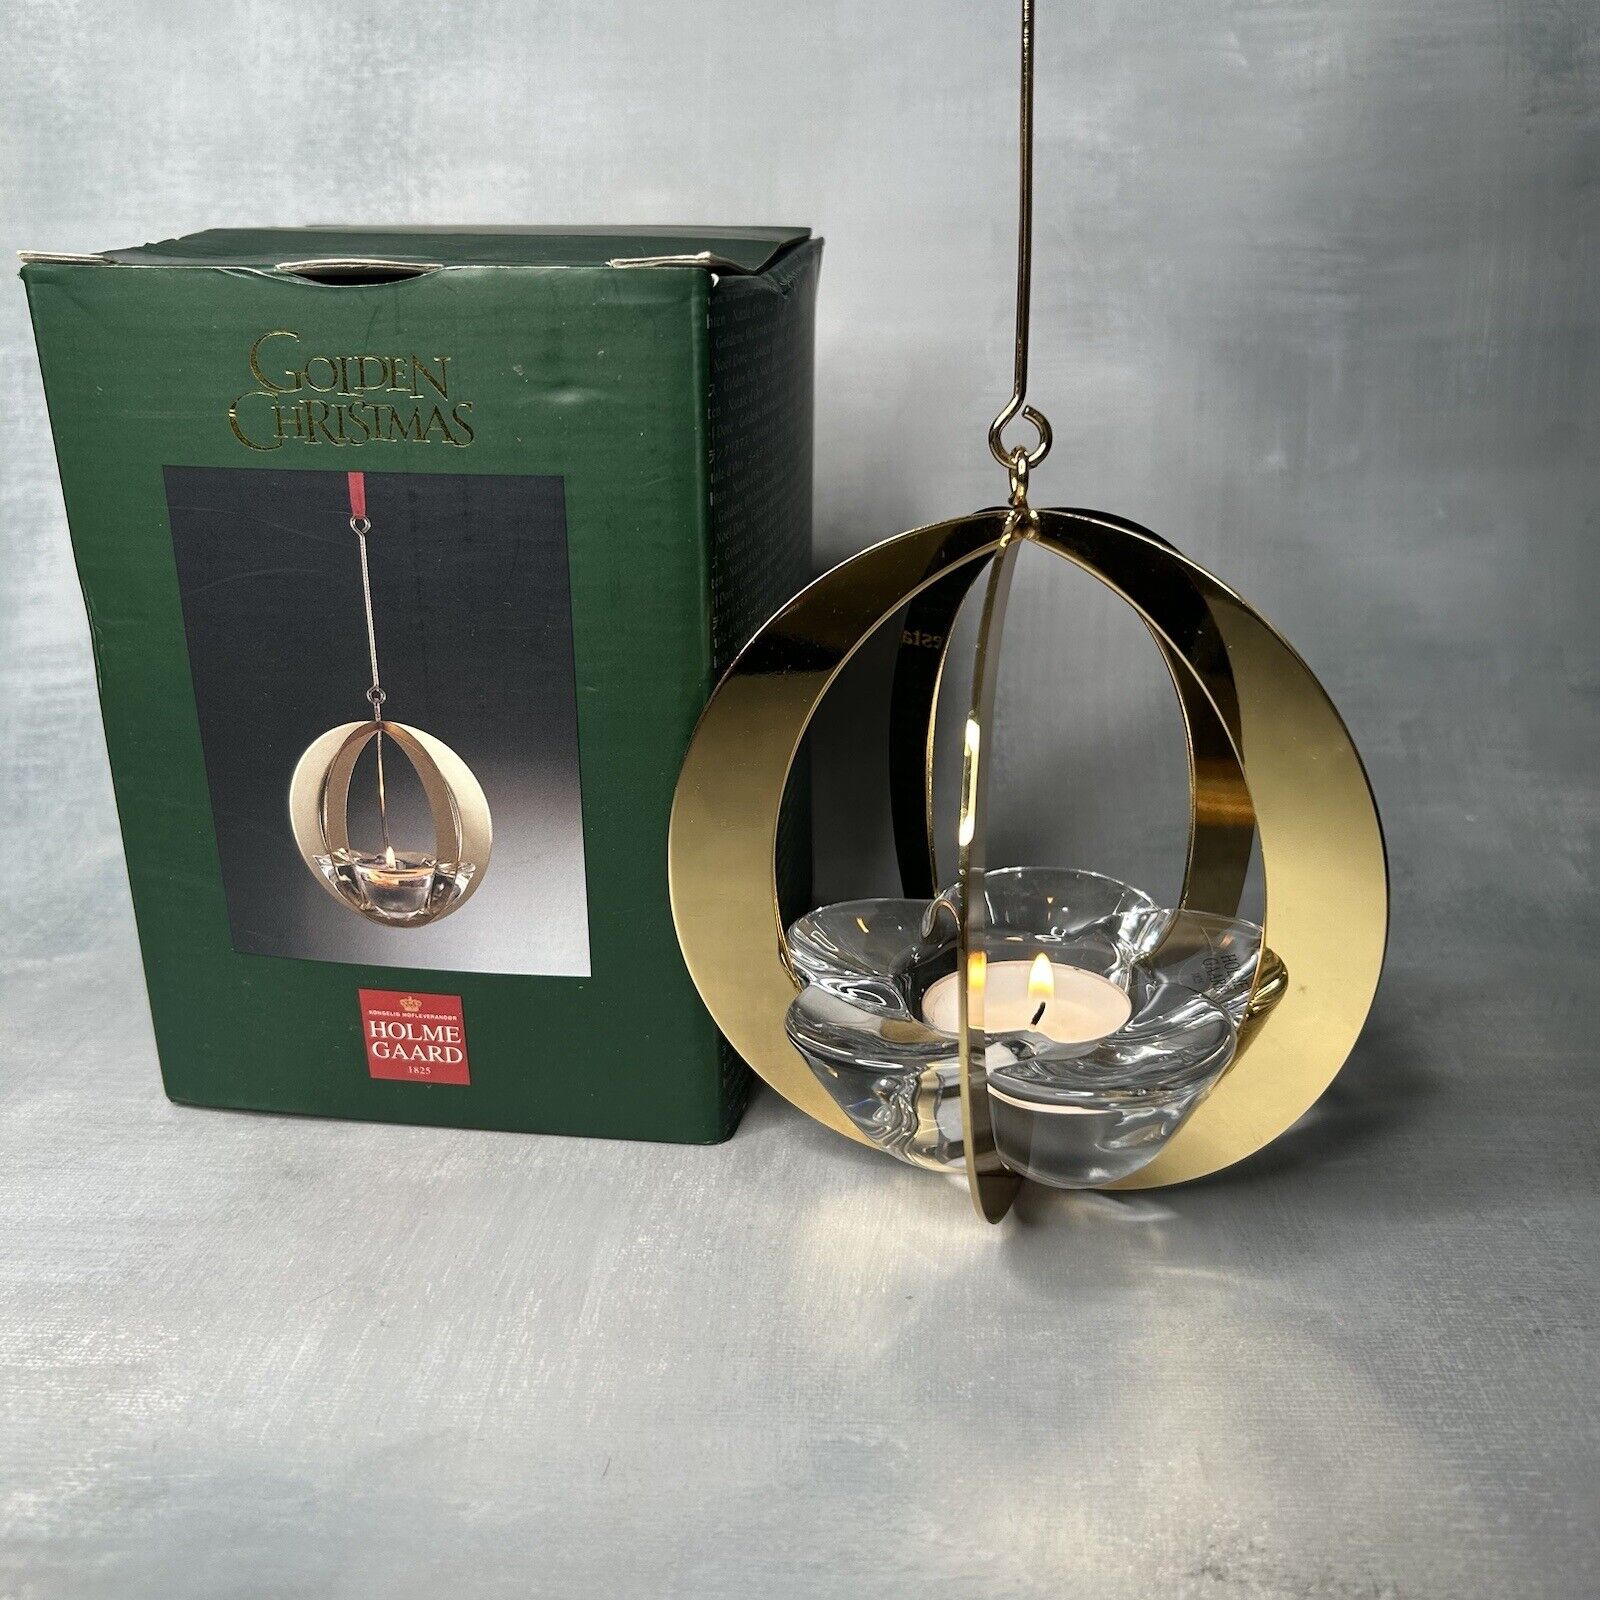 Holmegaard Denmark Golden Christmas Glass & Gold Metal 2004 Annual Candleholder